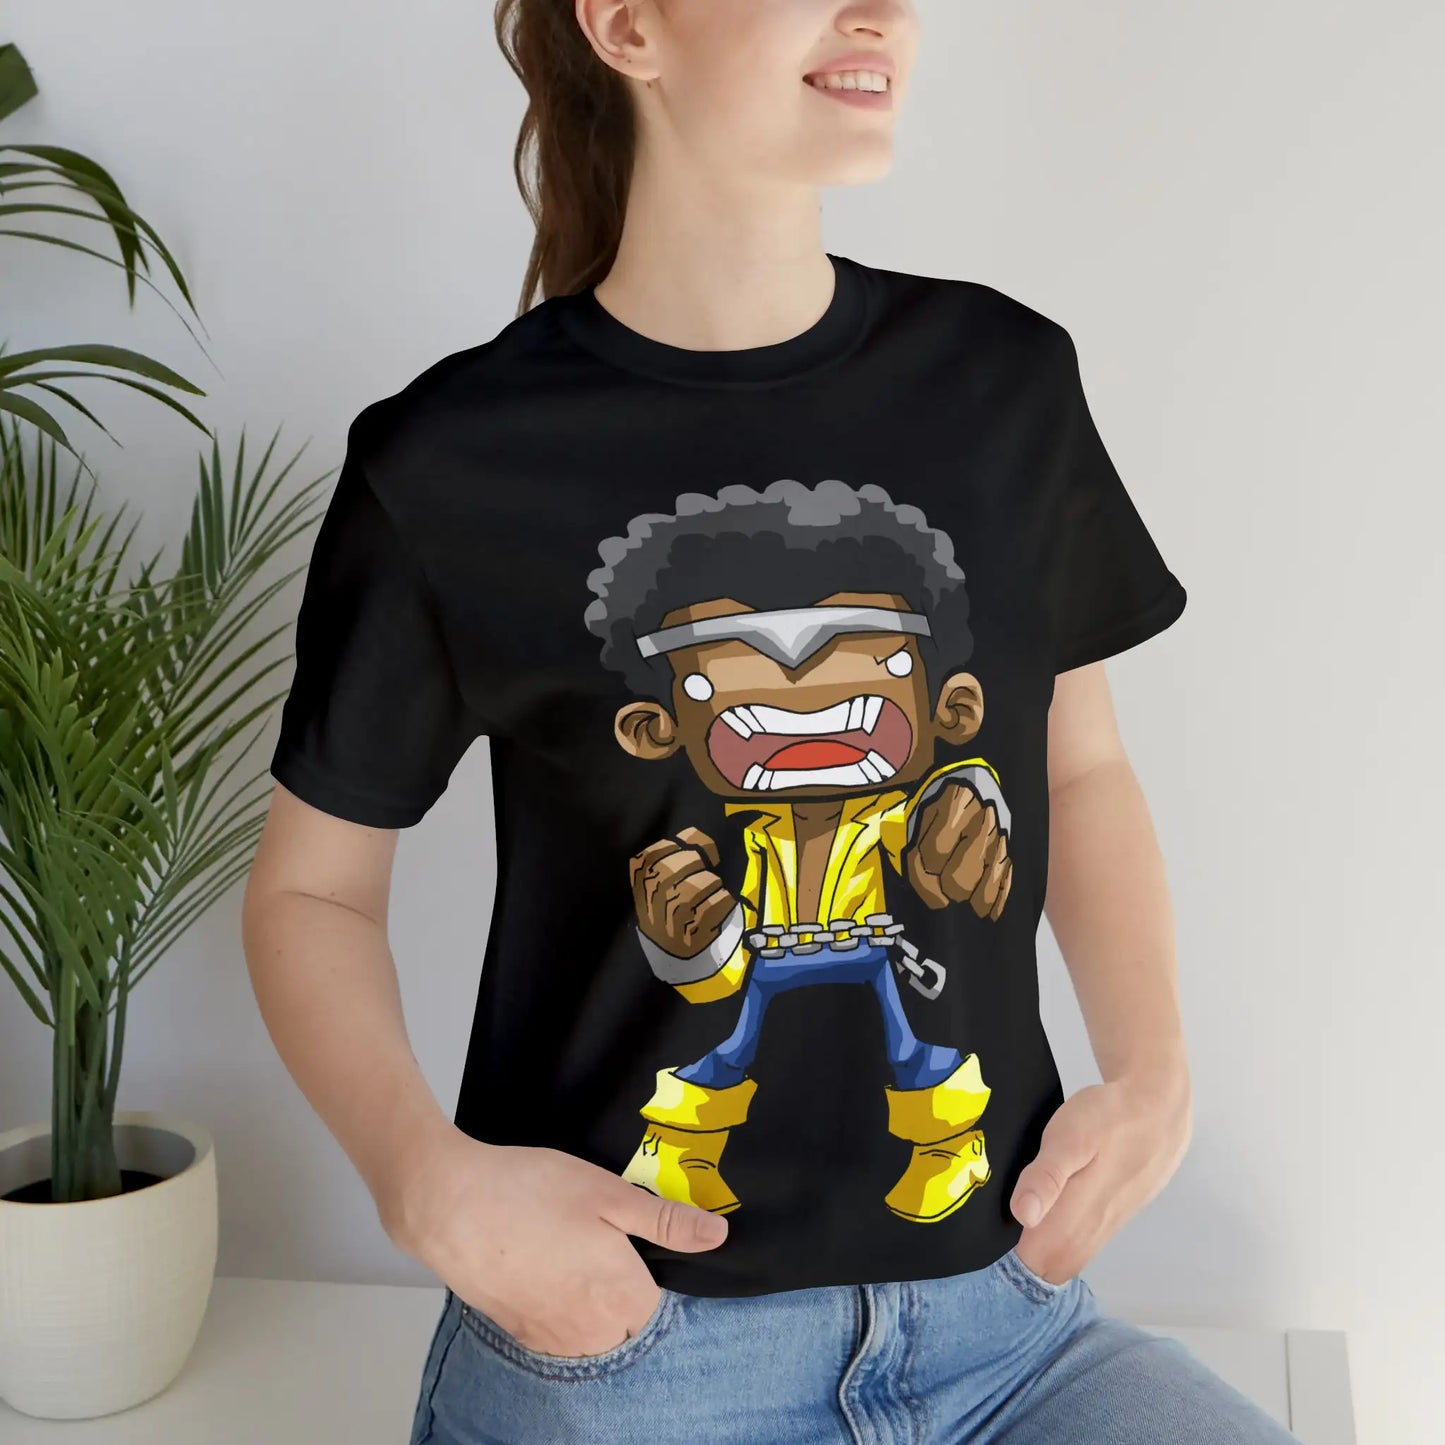 Luke Cage Power Man T-Shirt Cartoon Chibi Style Gift Tee Unisex For Men and Women